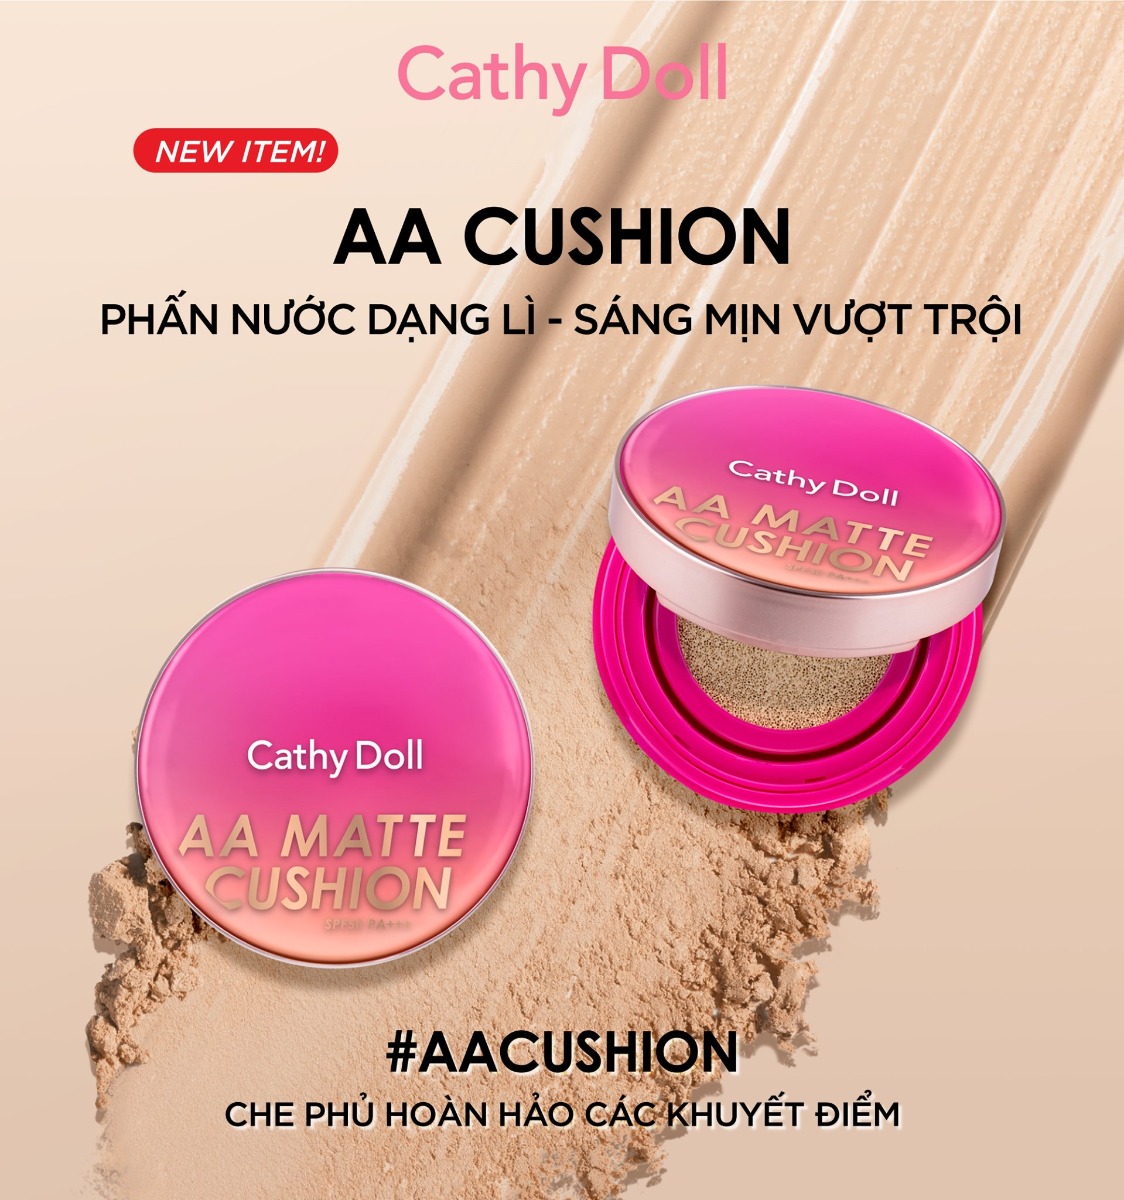 Phấn Nước Cathy Doll AA Matte Cushion SPF50 PA+++ Acne And Sebum Control